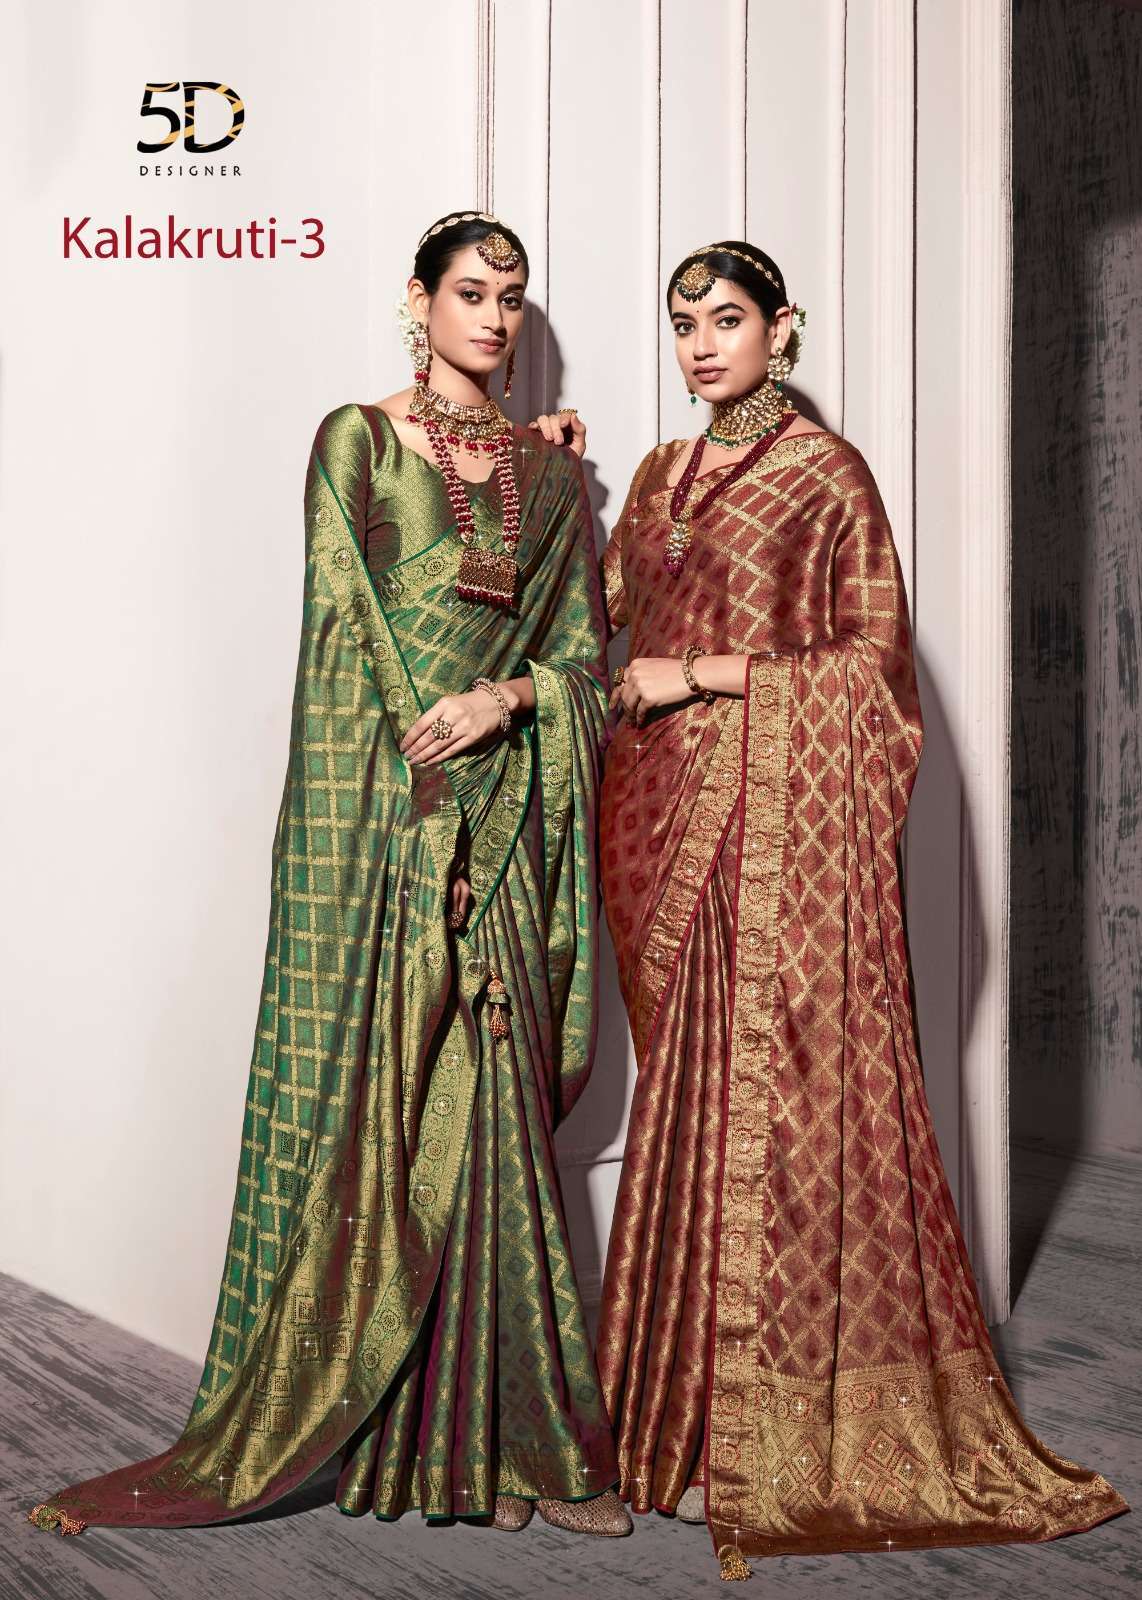 5d designer kalakruti vol 3 series 4139-4142 two tone pure silk saree